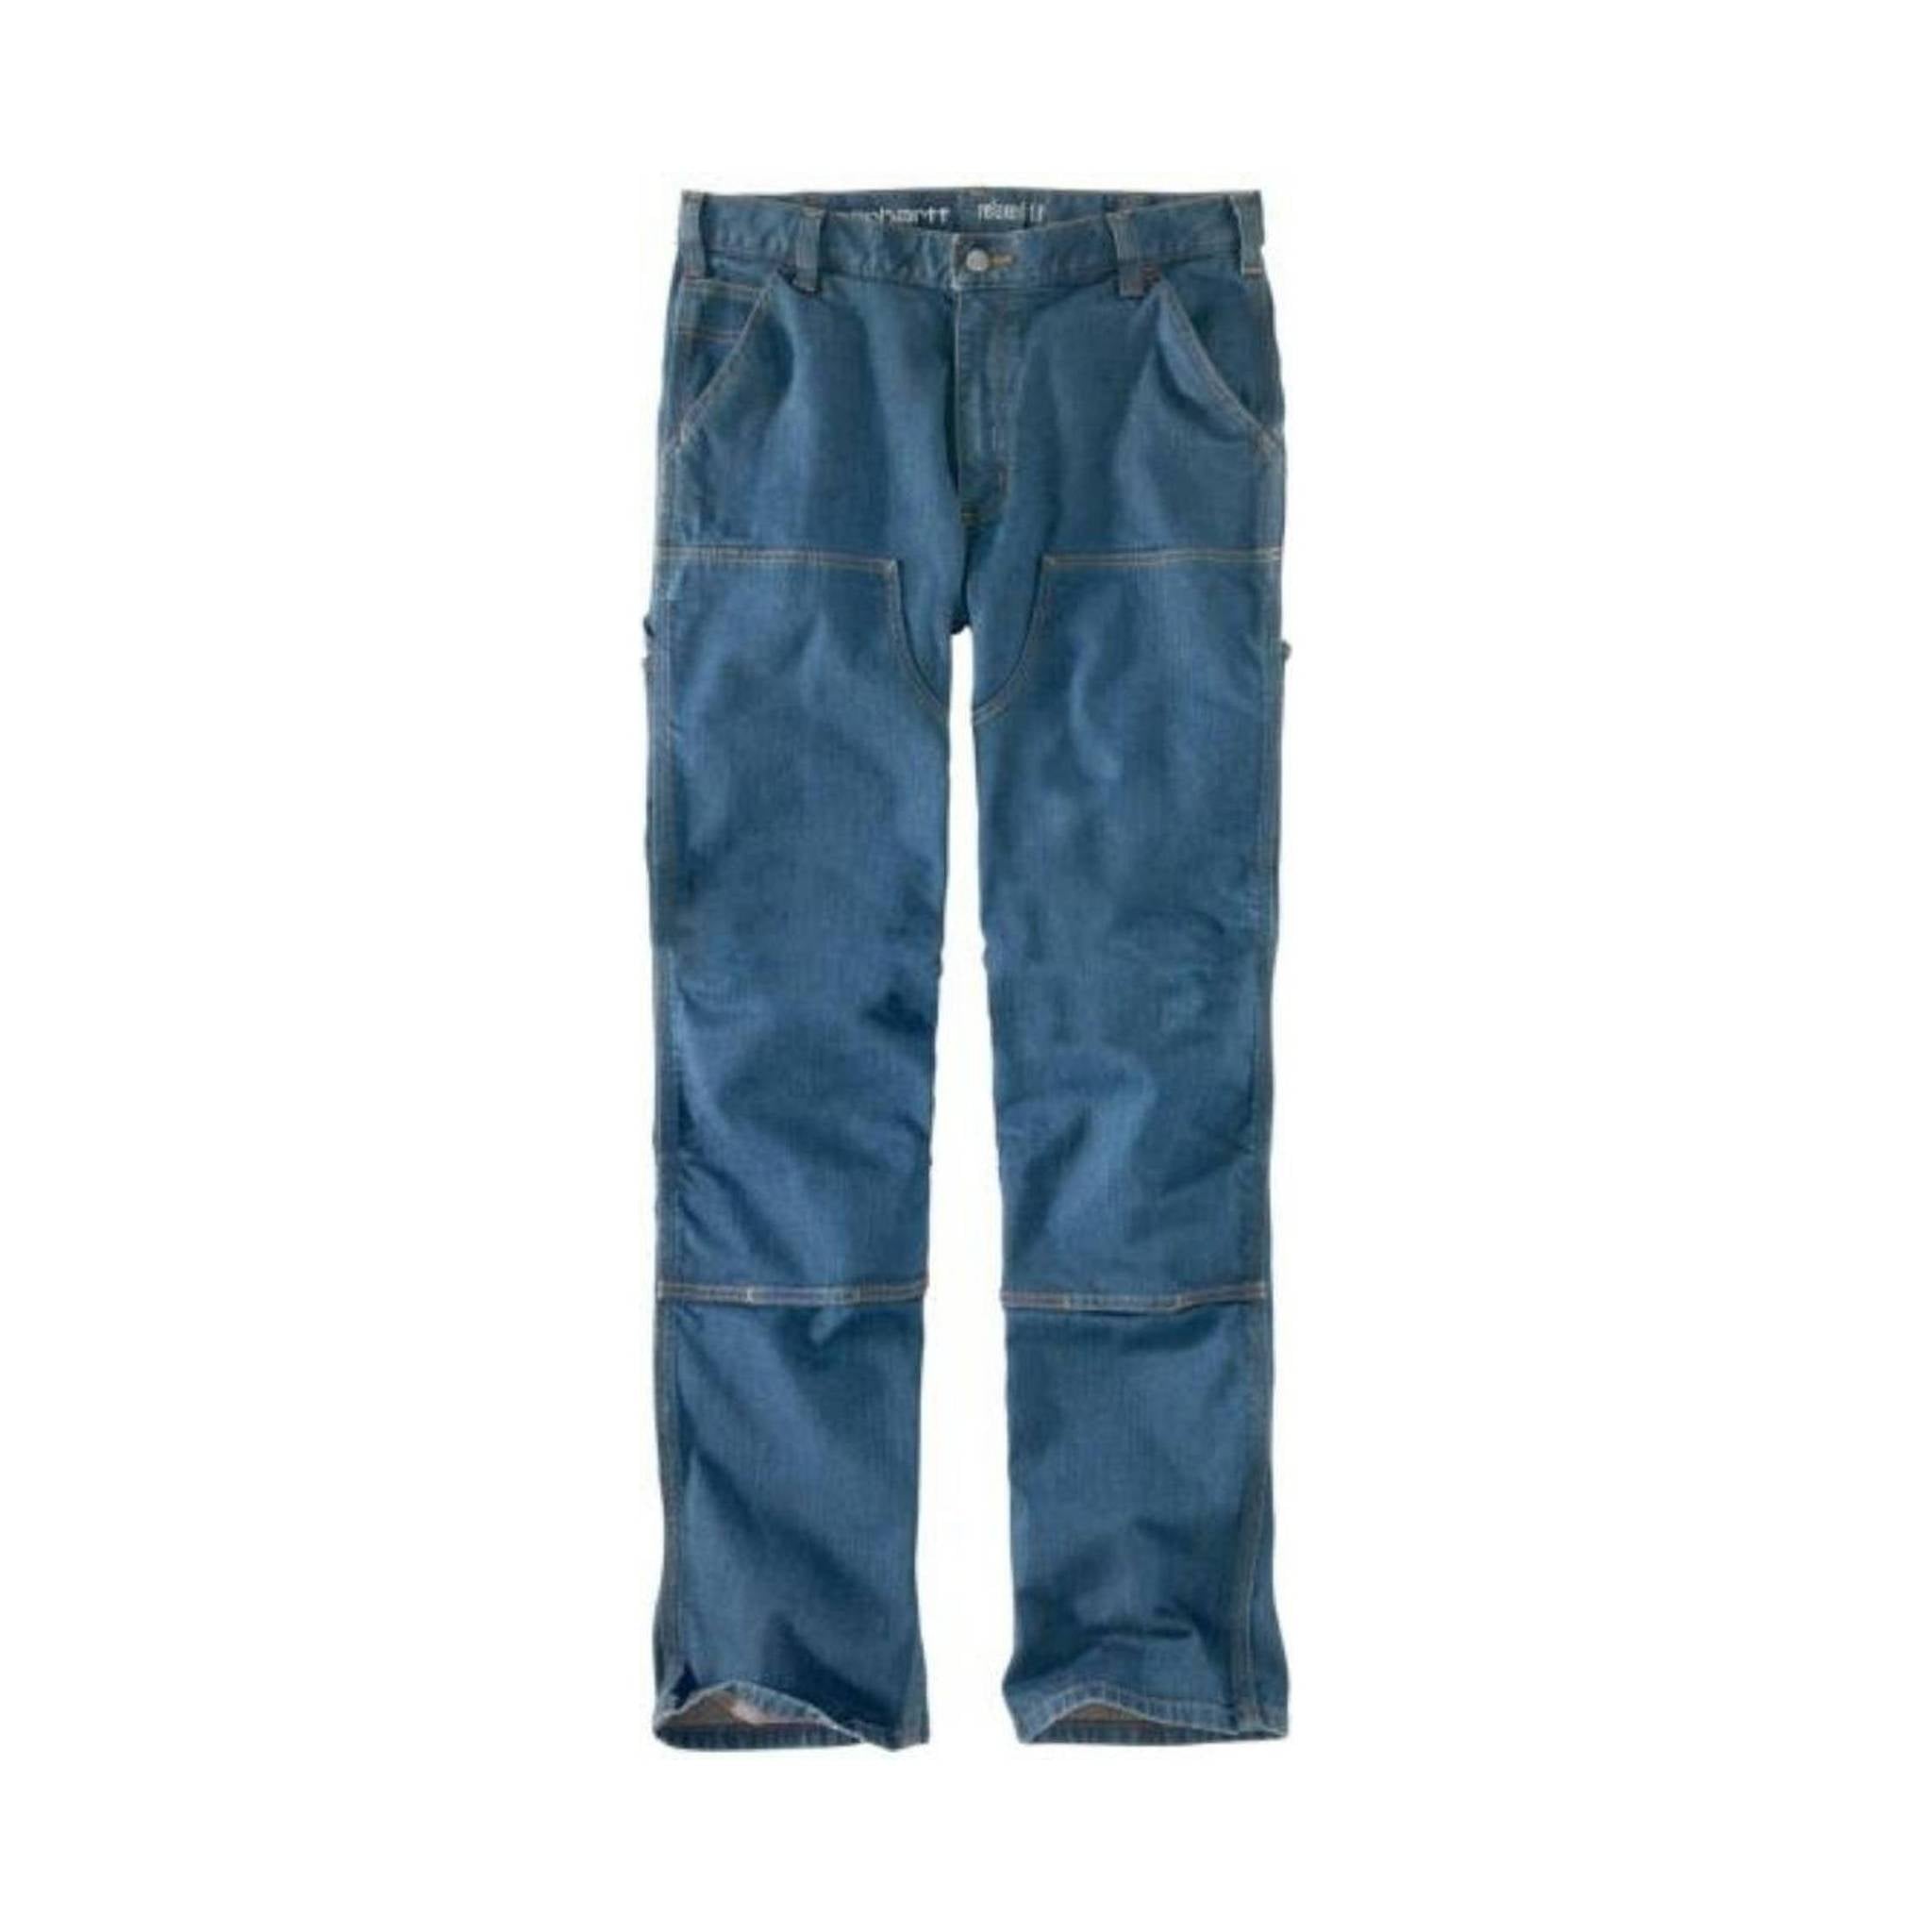 Carhartt Men's Denim Relaxed Fit Jeans